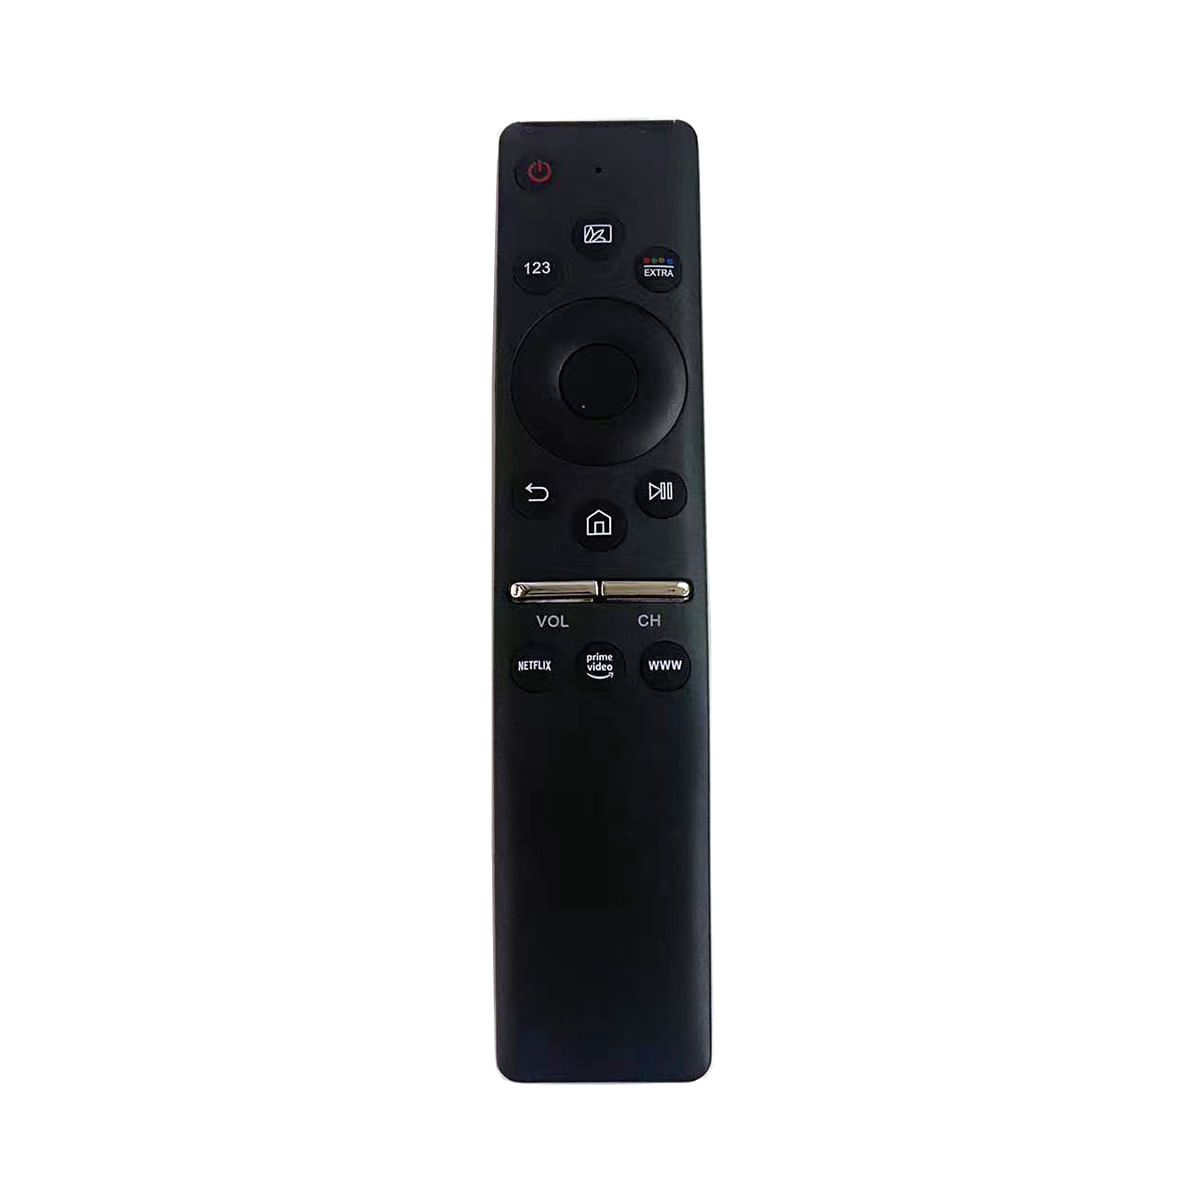 Control Remoto para Smart Tv Samsung acceso directo netflix amazon